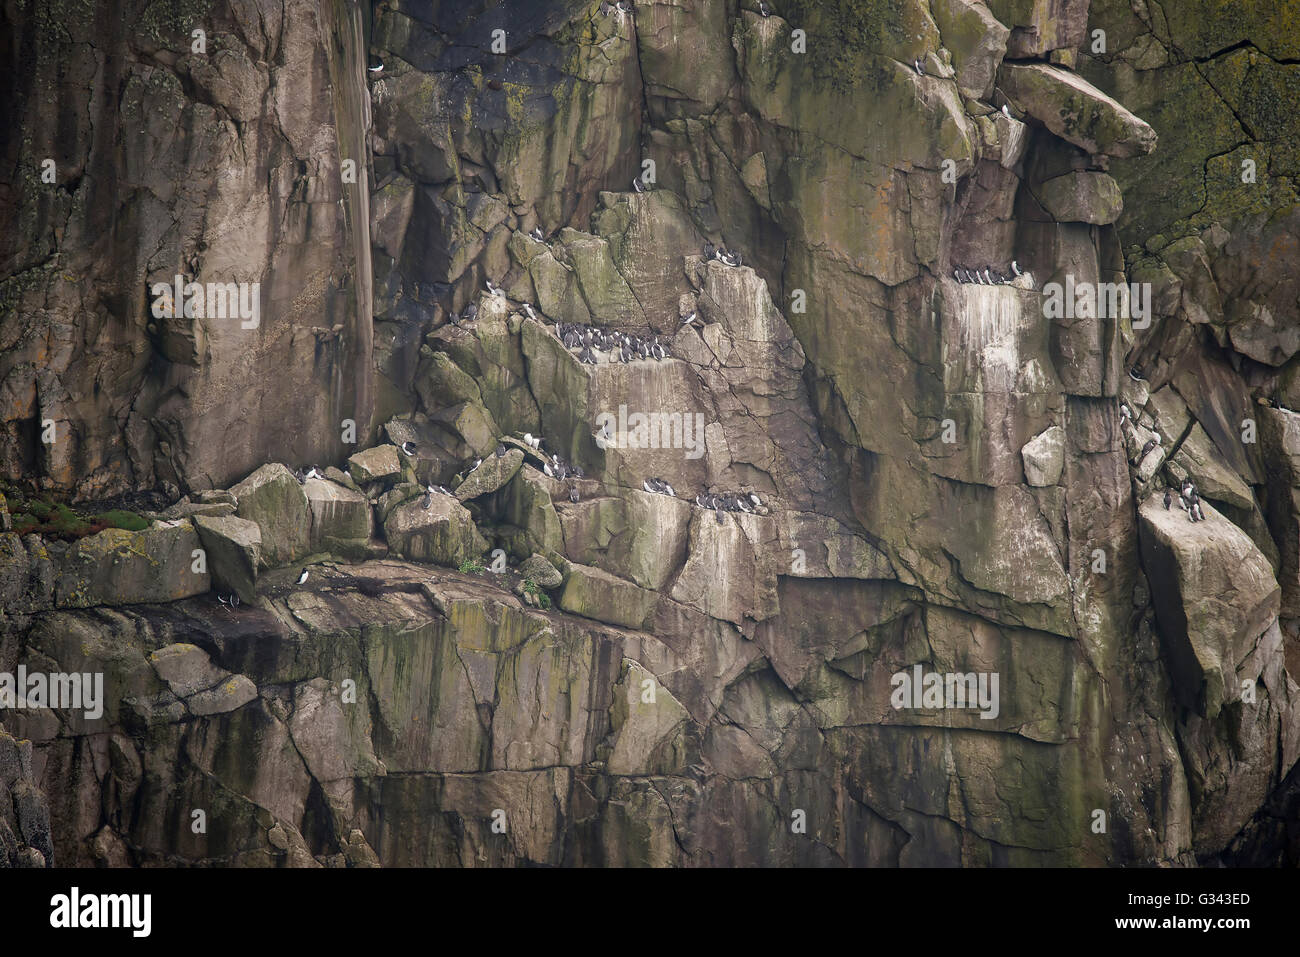 Colony of guillemot murre birds nesting on cliff face Stock Photo